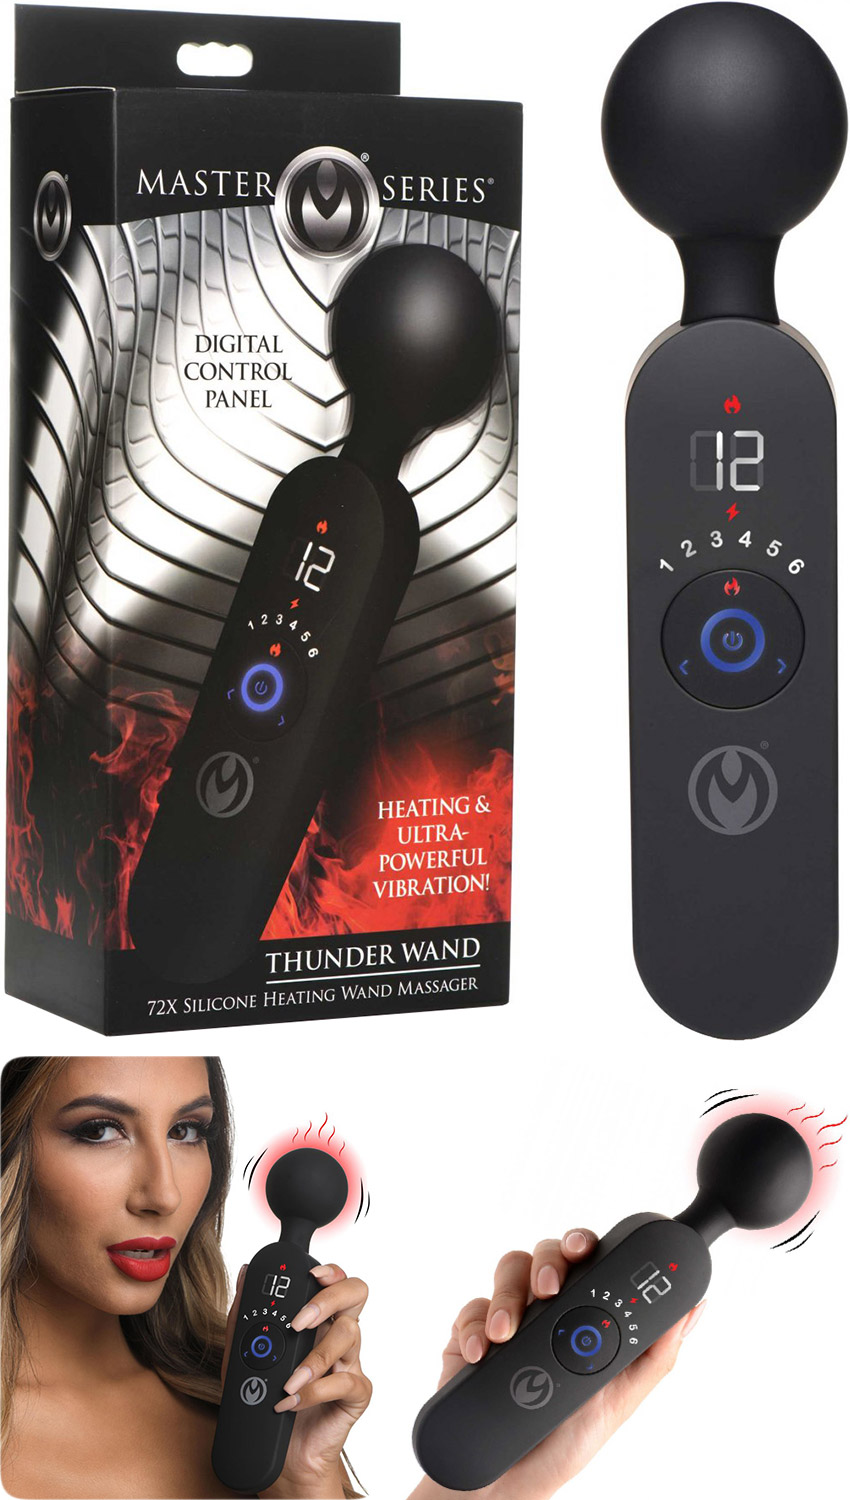 Master Series Thunder Wand heating wand vibrator